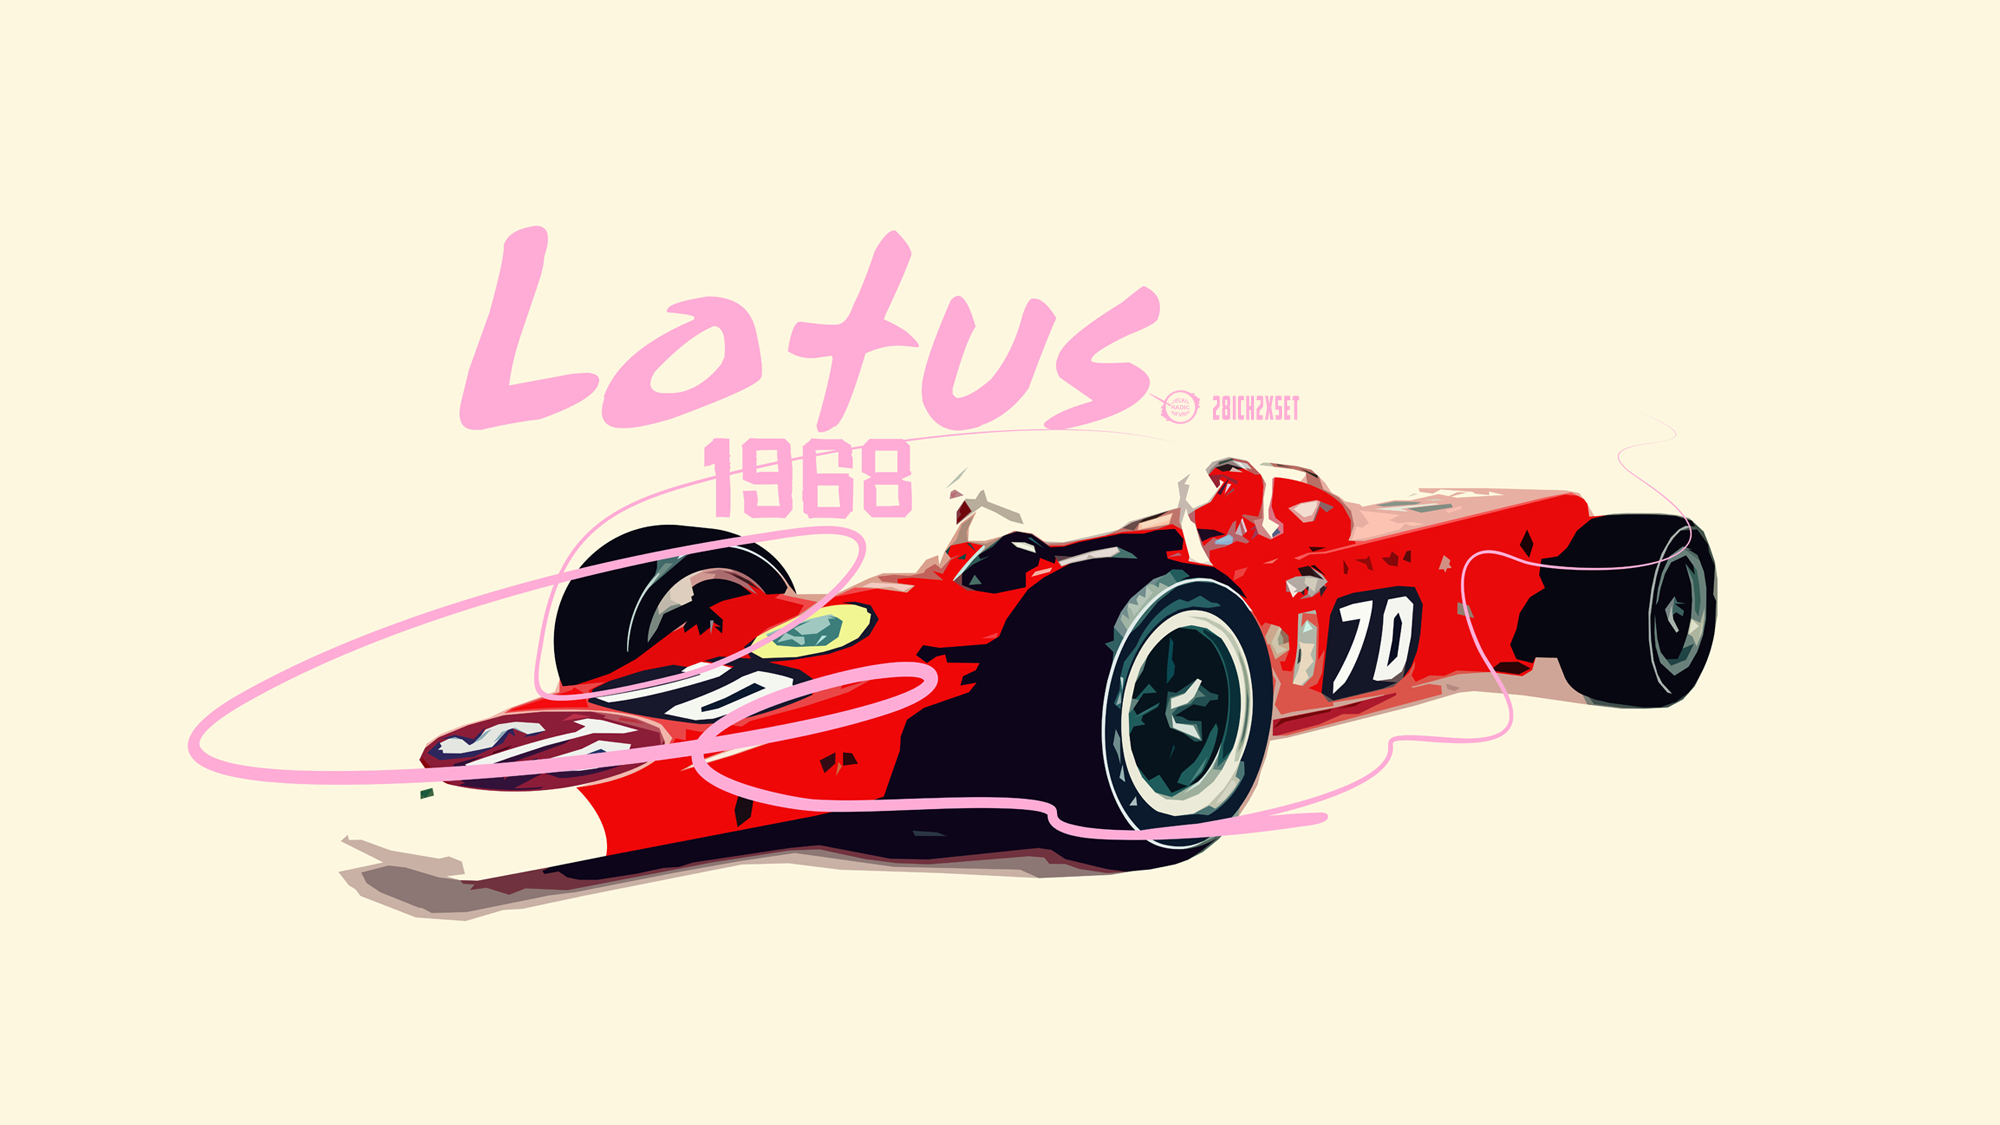 vehicles, lotus, lotus cars, race car